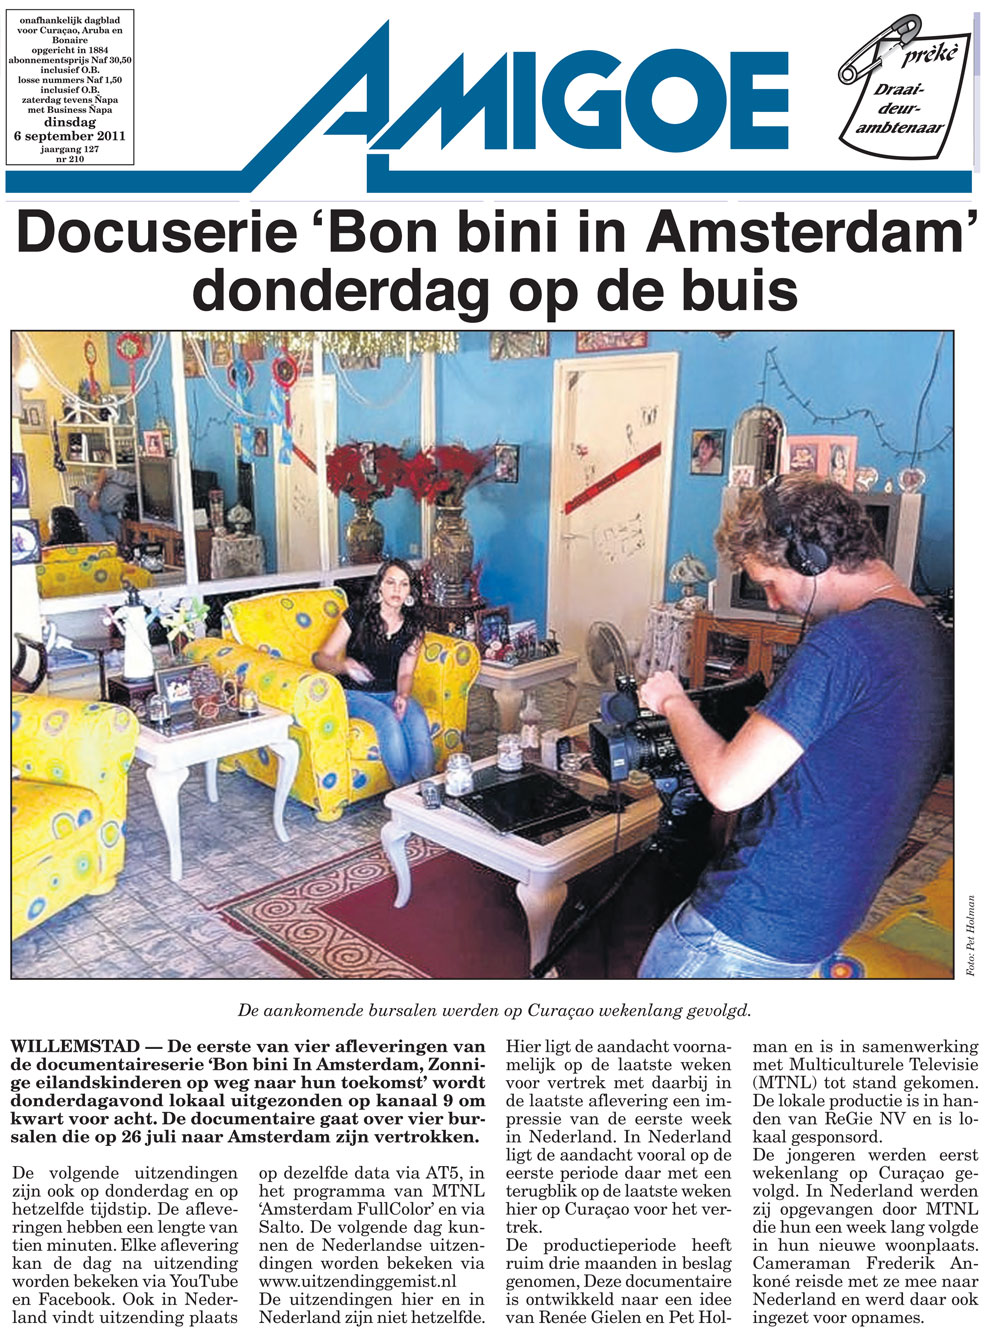 Docuserie ‘Bon bini in Amsterdam’ donderdag op de buis